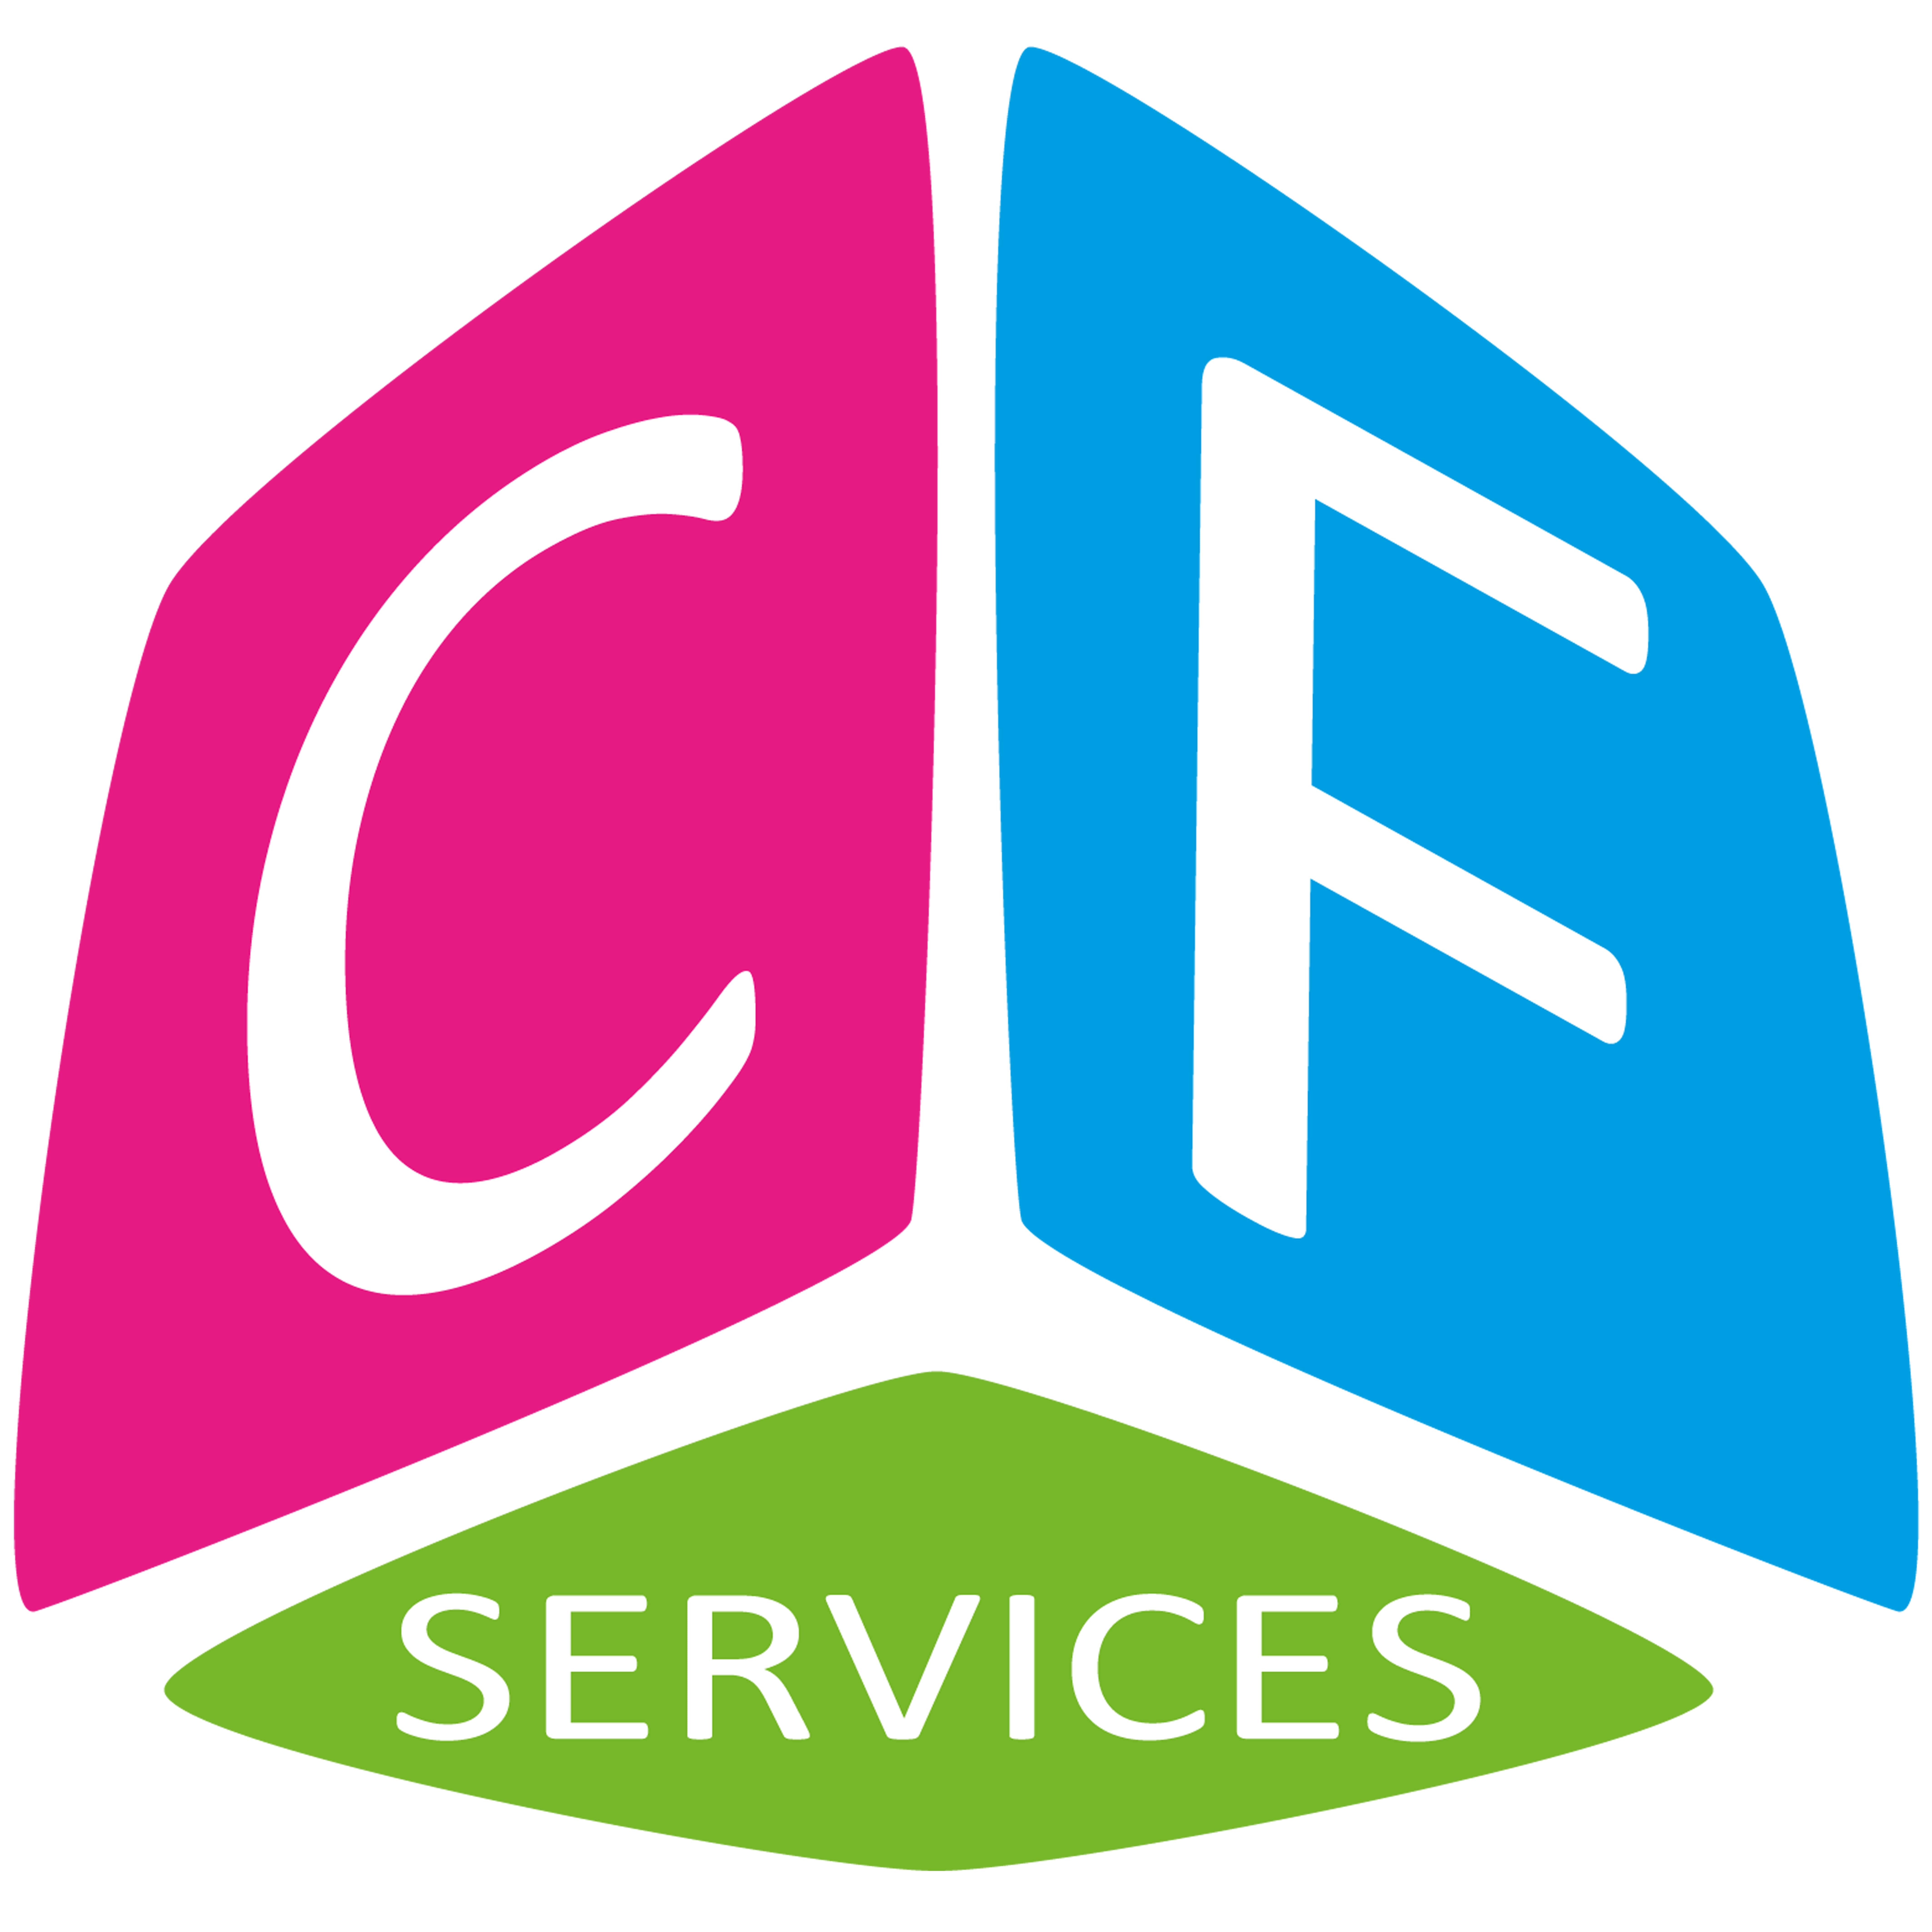 CF SERVICES